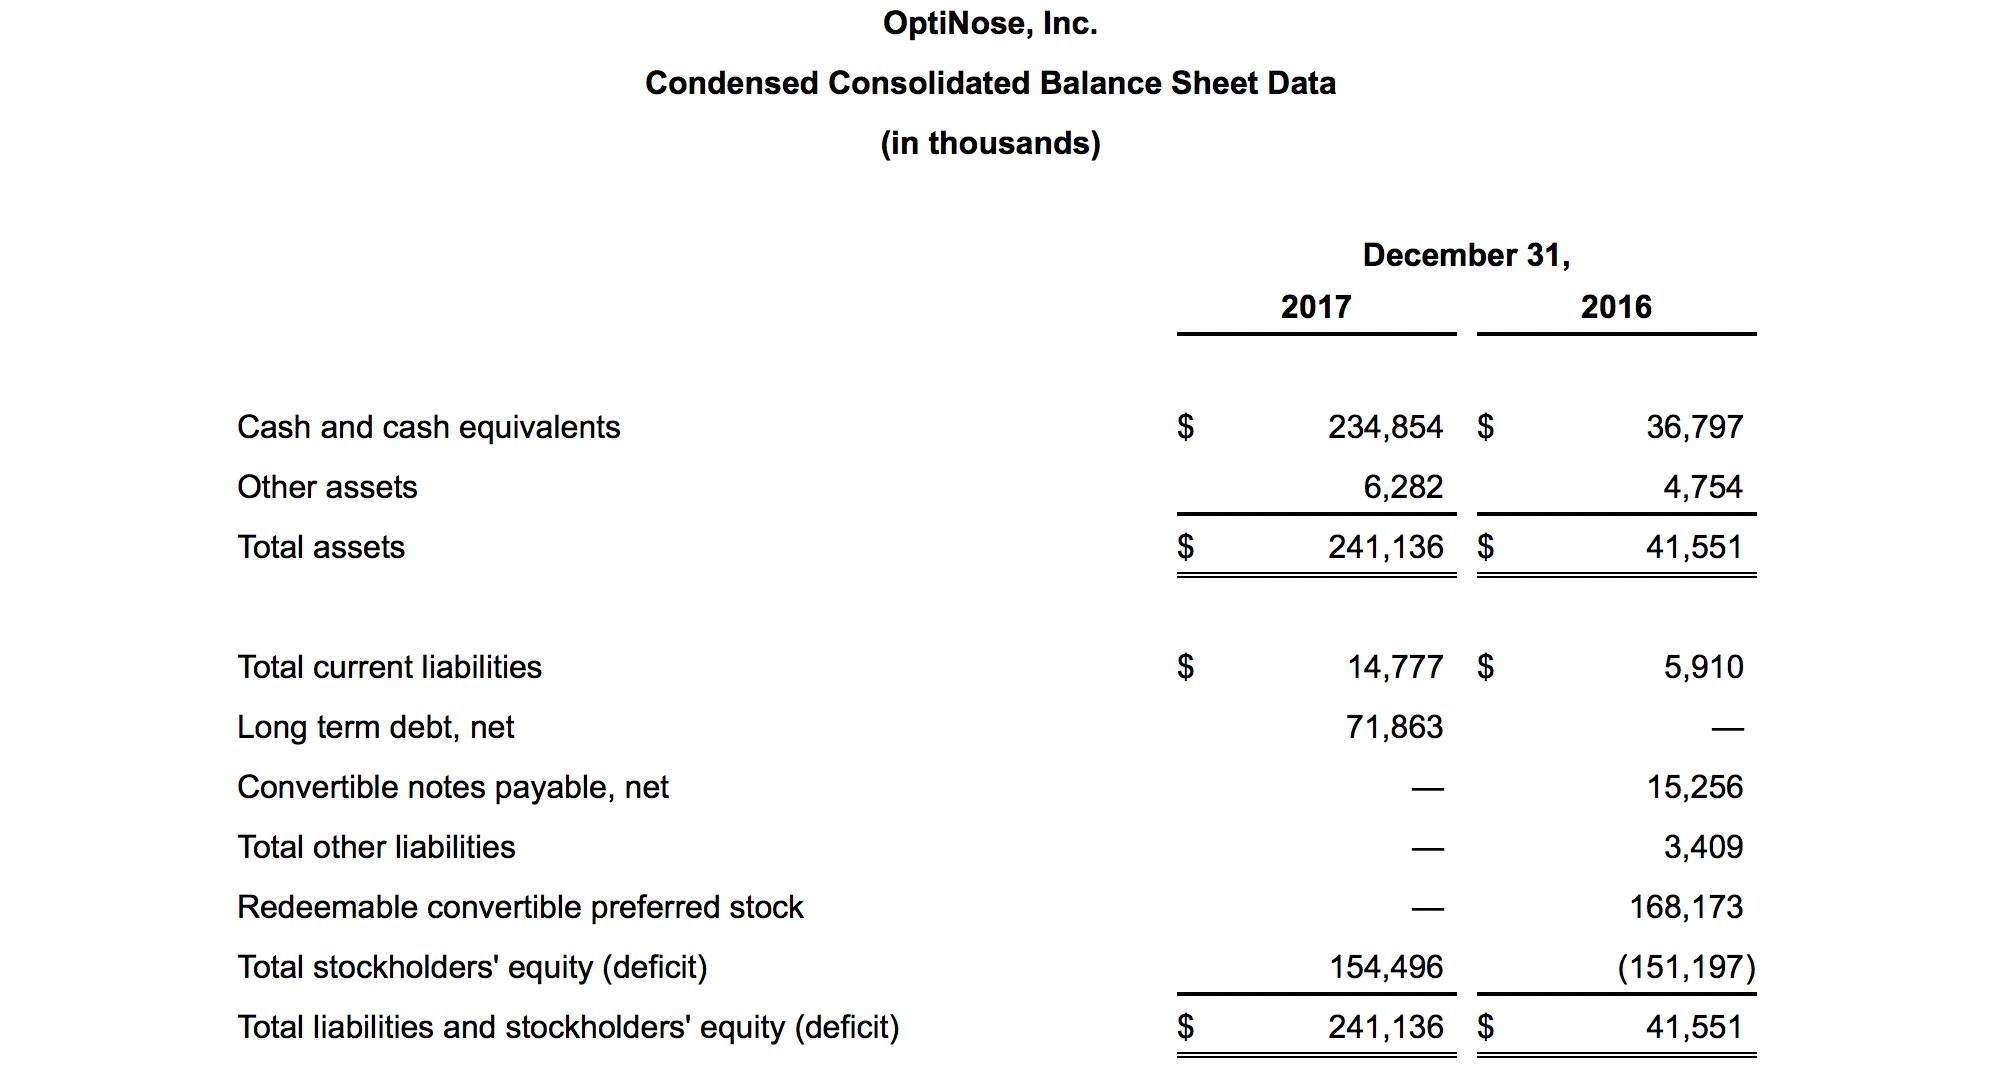 Optinose condensed consolidated balance sheet data